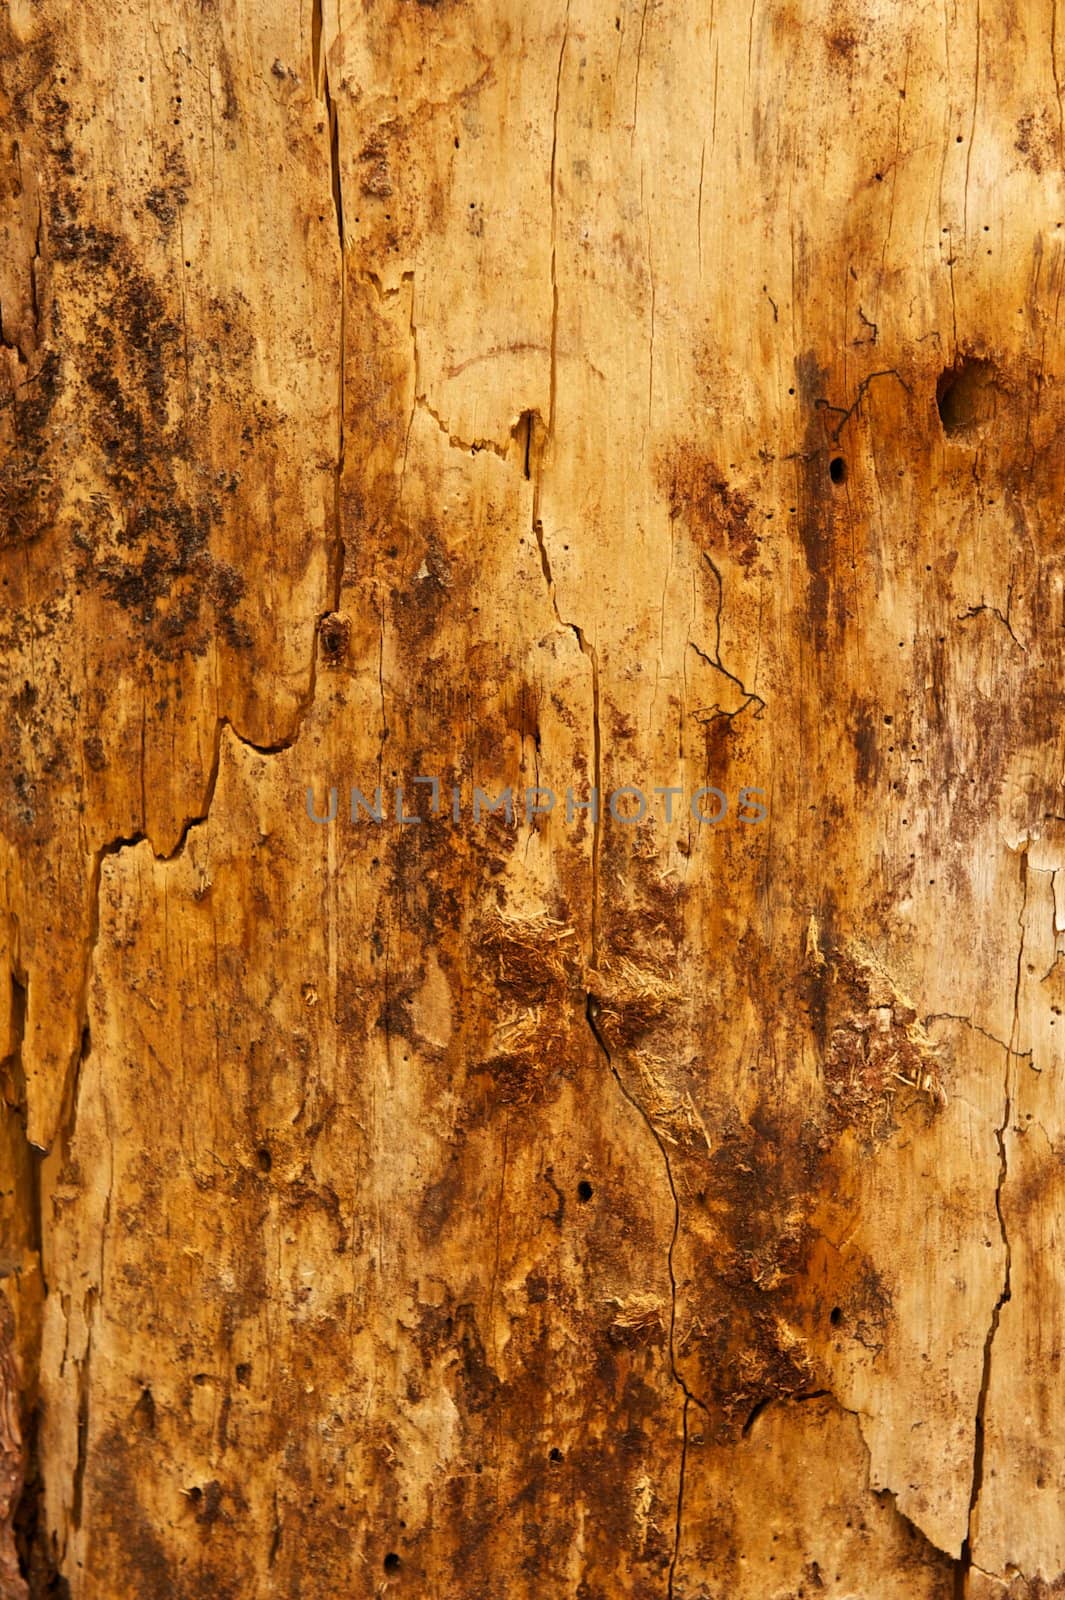 Dirty Ponderosa Pine Tree by pixelsnap